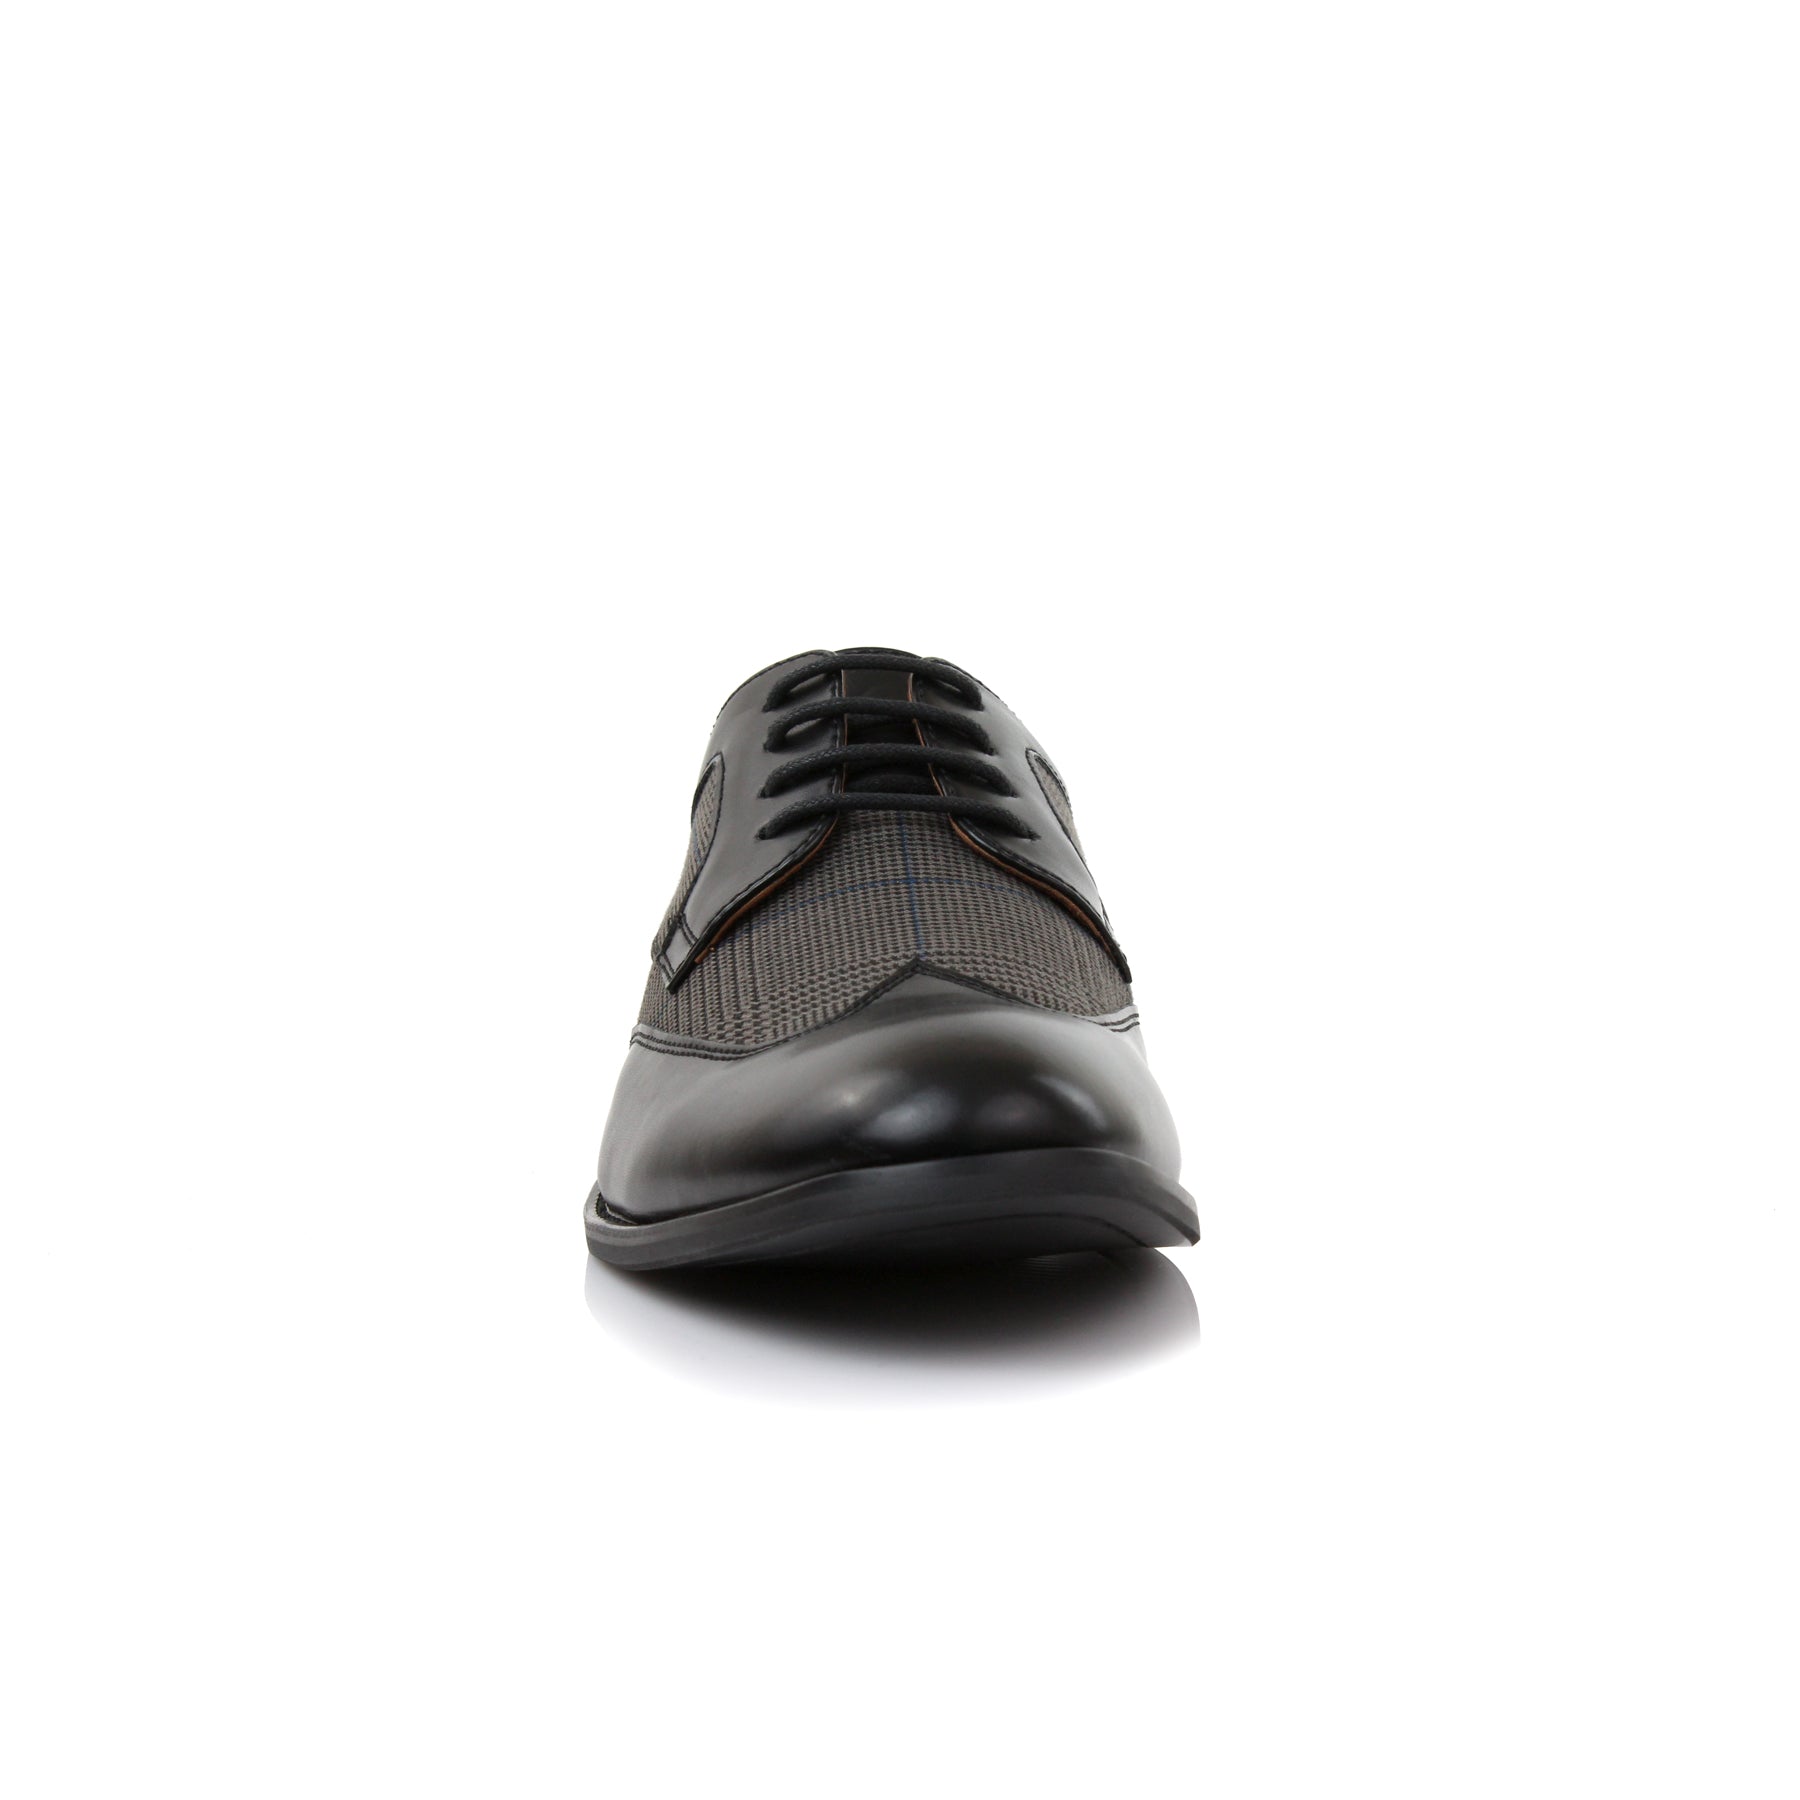 Plaid Wingtip Derby Shoes | Julian by Ferro Aldo | Conal Footwear | Front Angle View